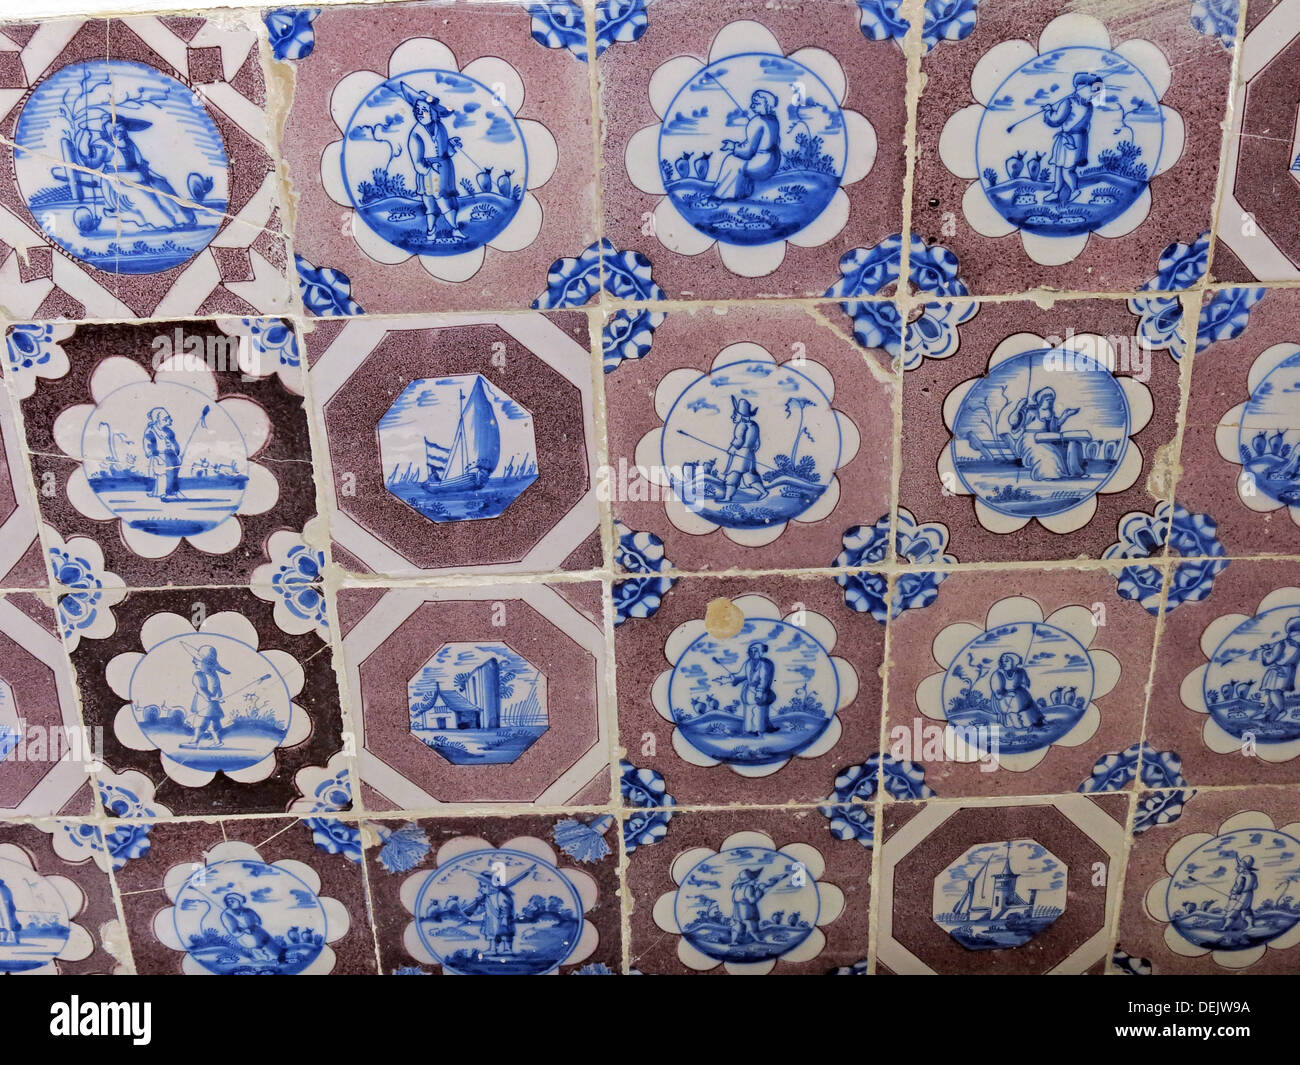 Ceramic Tiles in Brown & Dutch Blue,Barrington Court,ilminster,Somerset,England,UK,NT Stock Photo